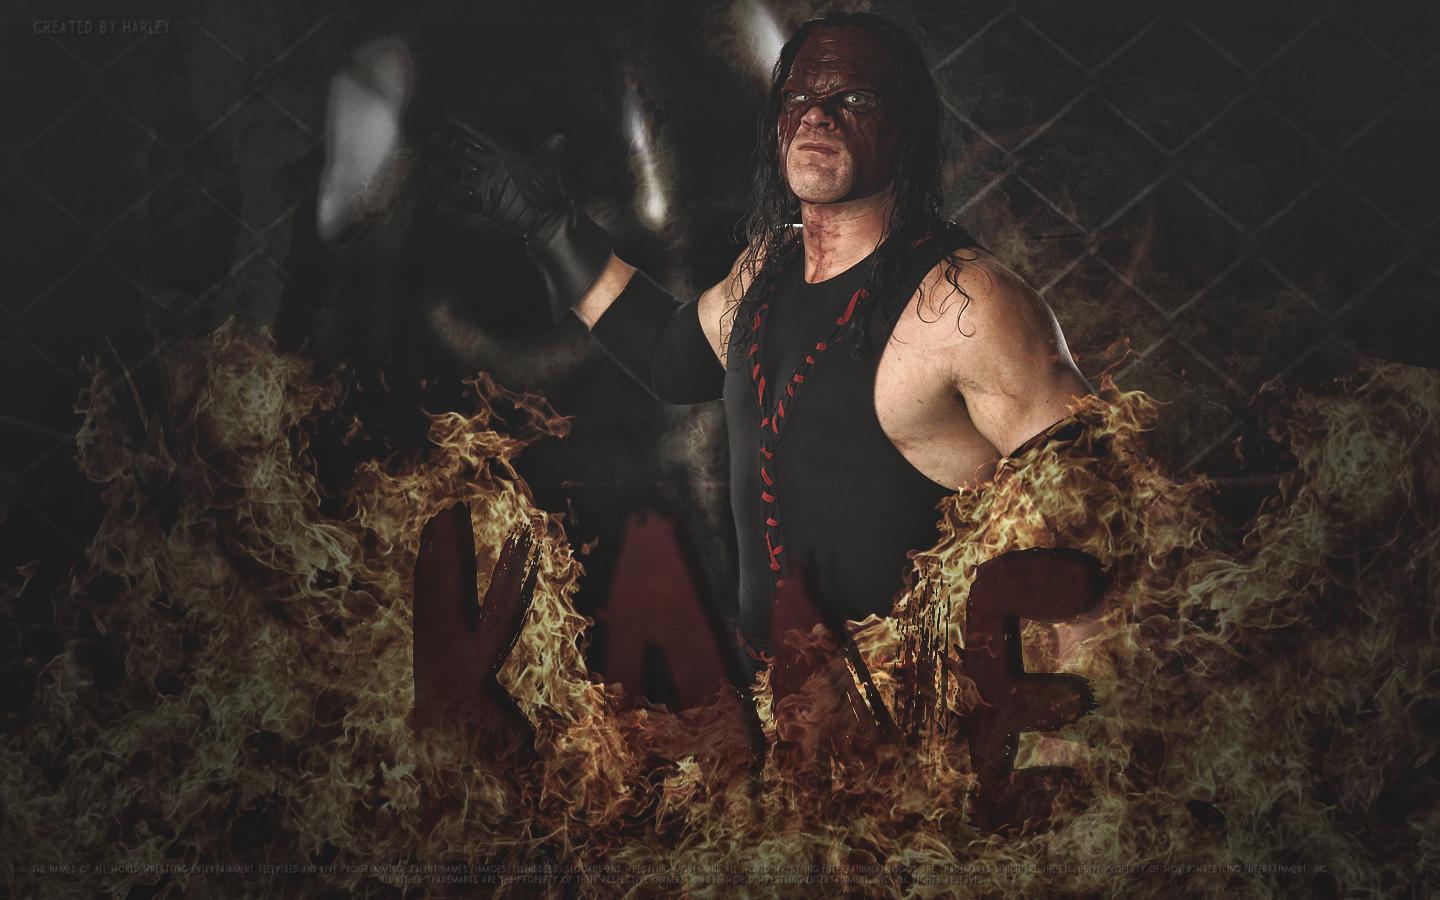 WWE Kane 2015 Wallpapers - Wallpaper Cave